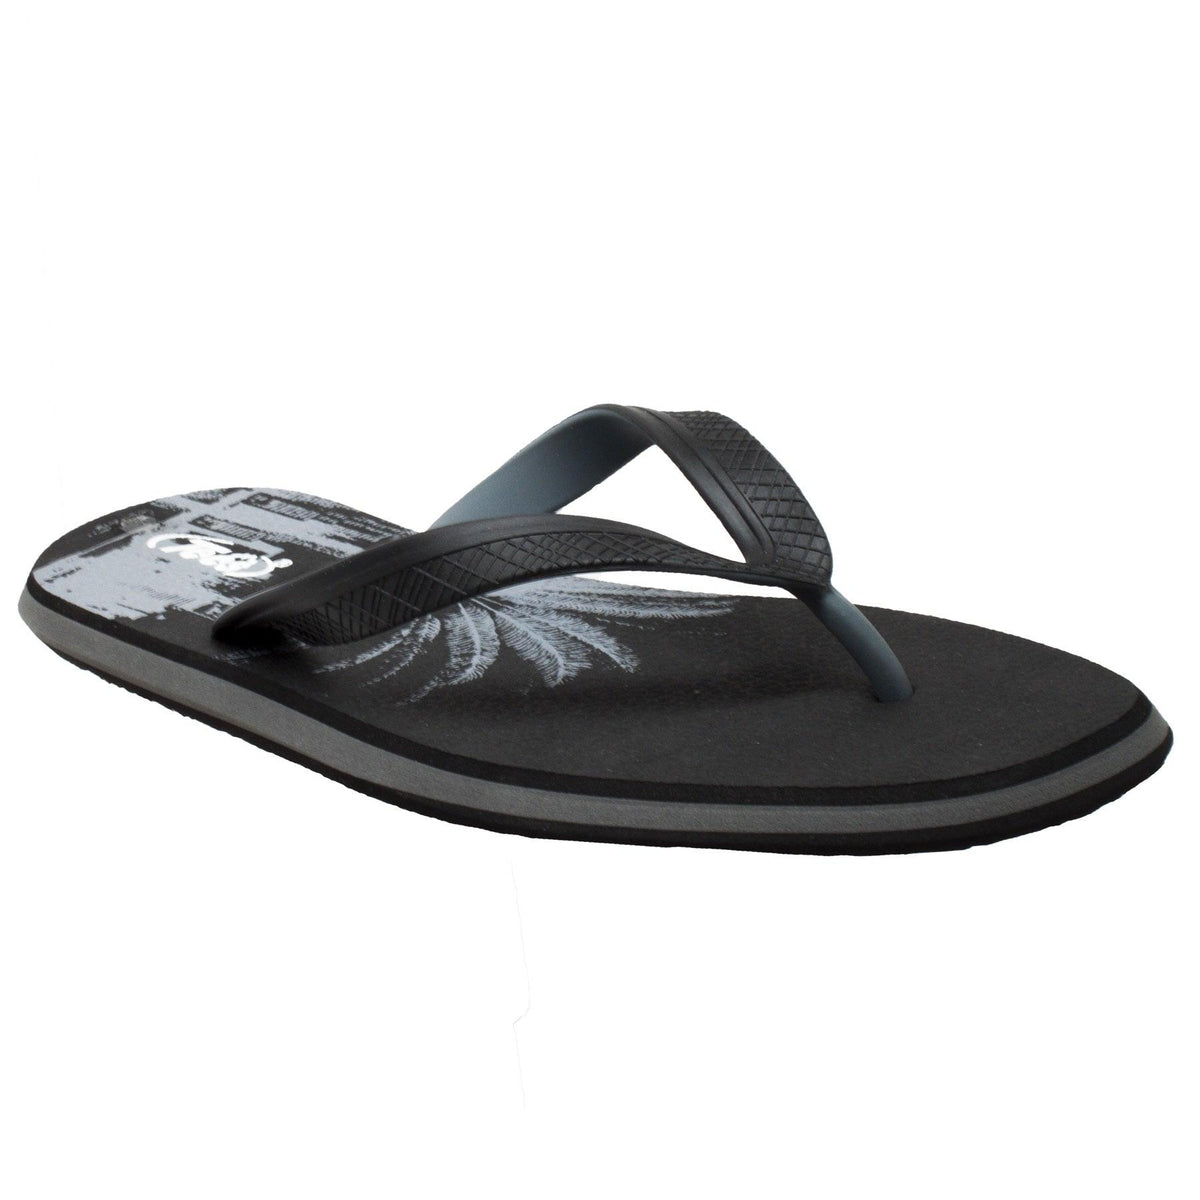 Shaboom Men's Dual Density Comfort Thong Sandal Black - Flyclothing LLC